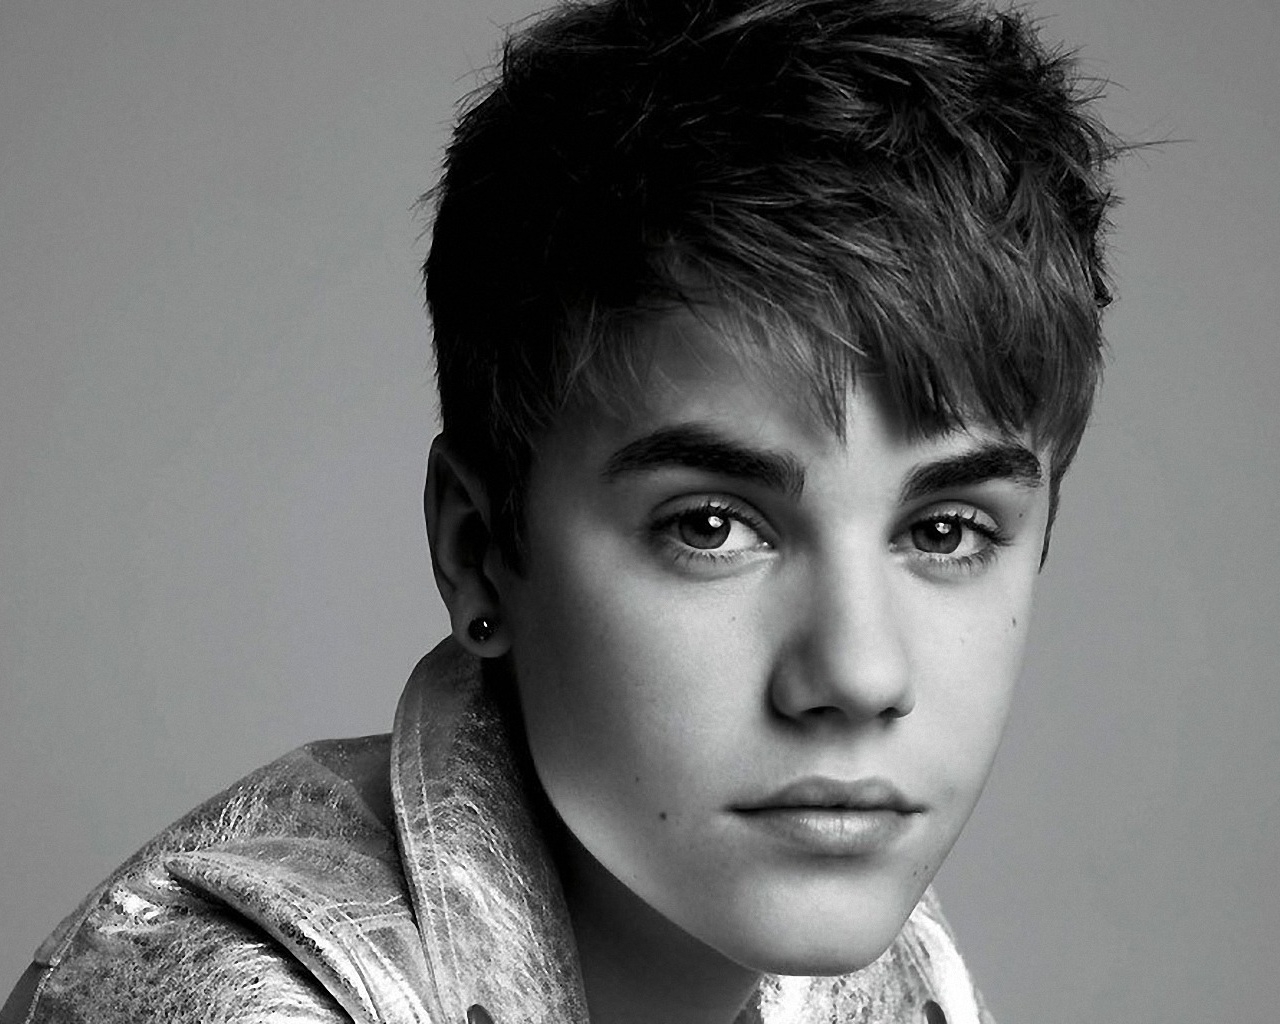 Wallpaper, Justin Bieber, face, eyes, singer, black and white 1280x1024